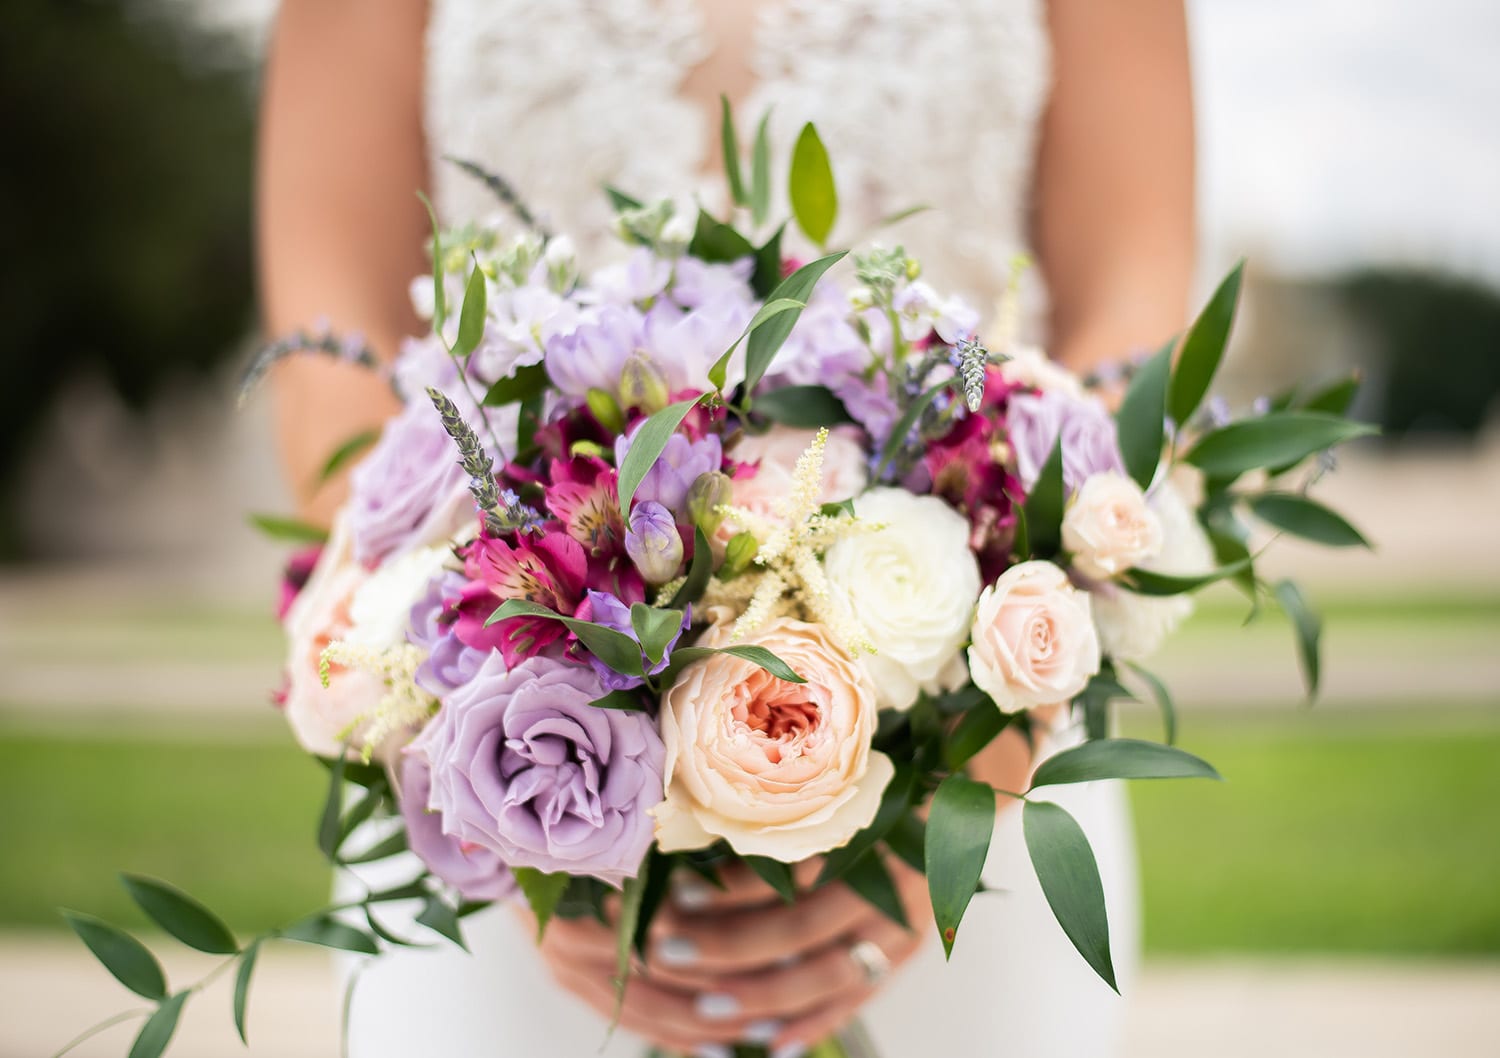 Casa Feliz wedding venue in Winter park, Florida Italian wedding bouquet with lavender and roses